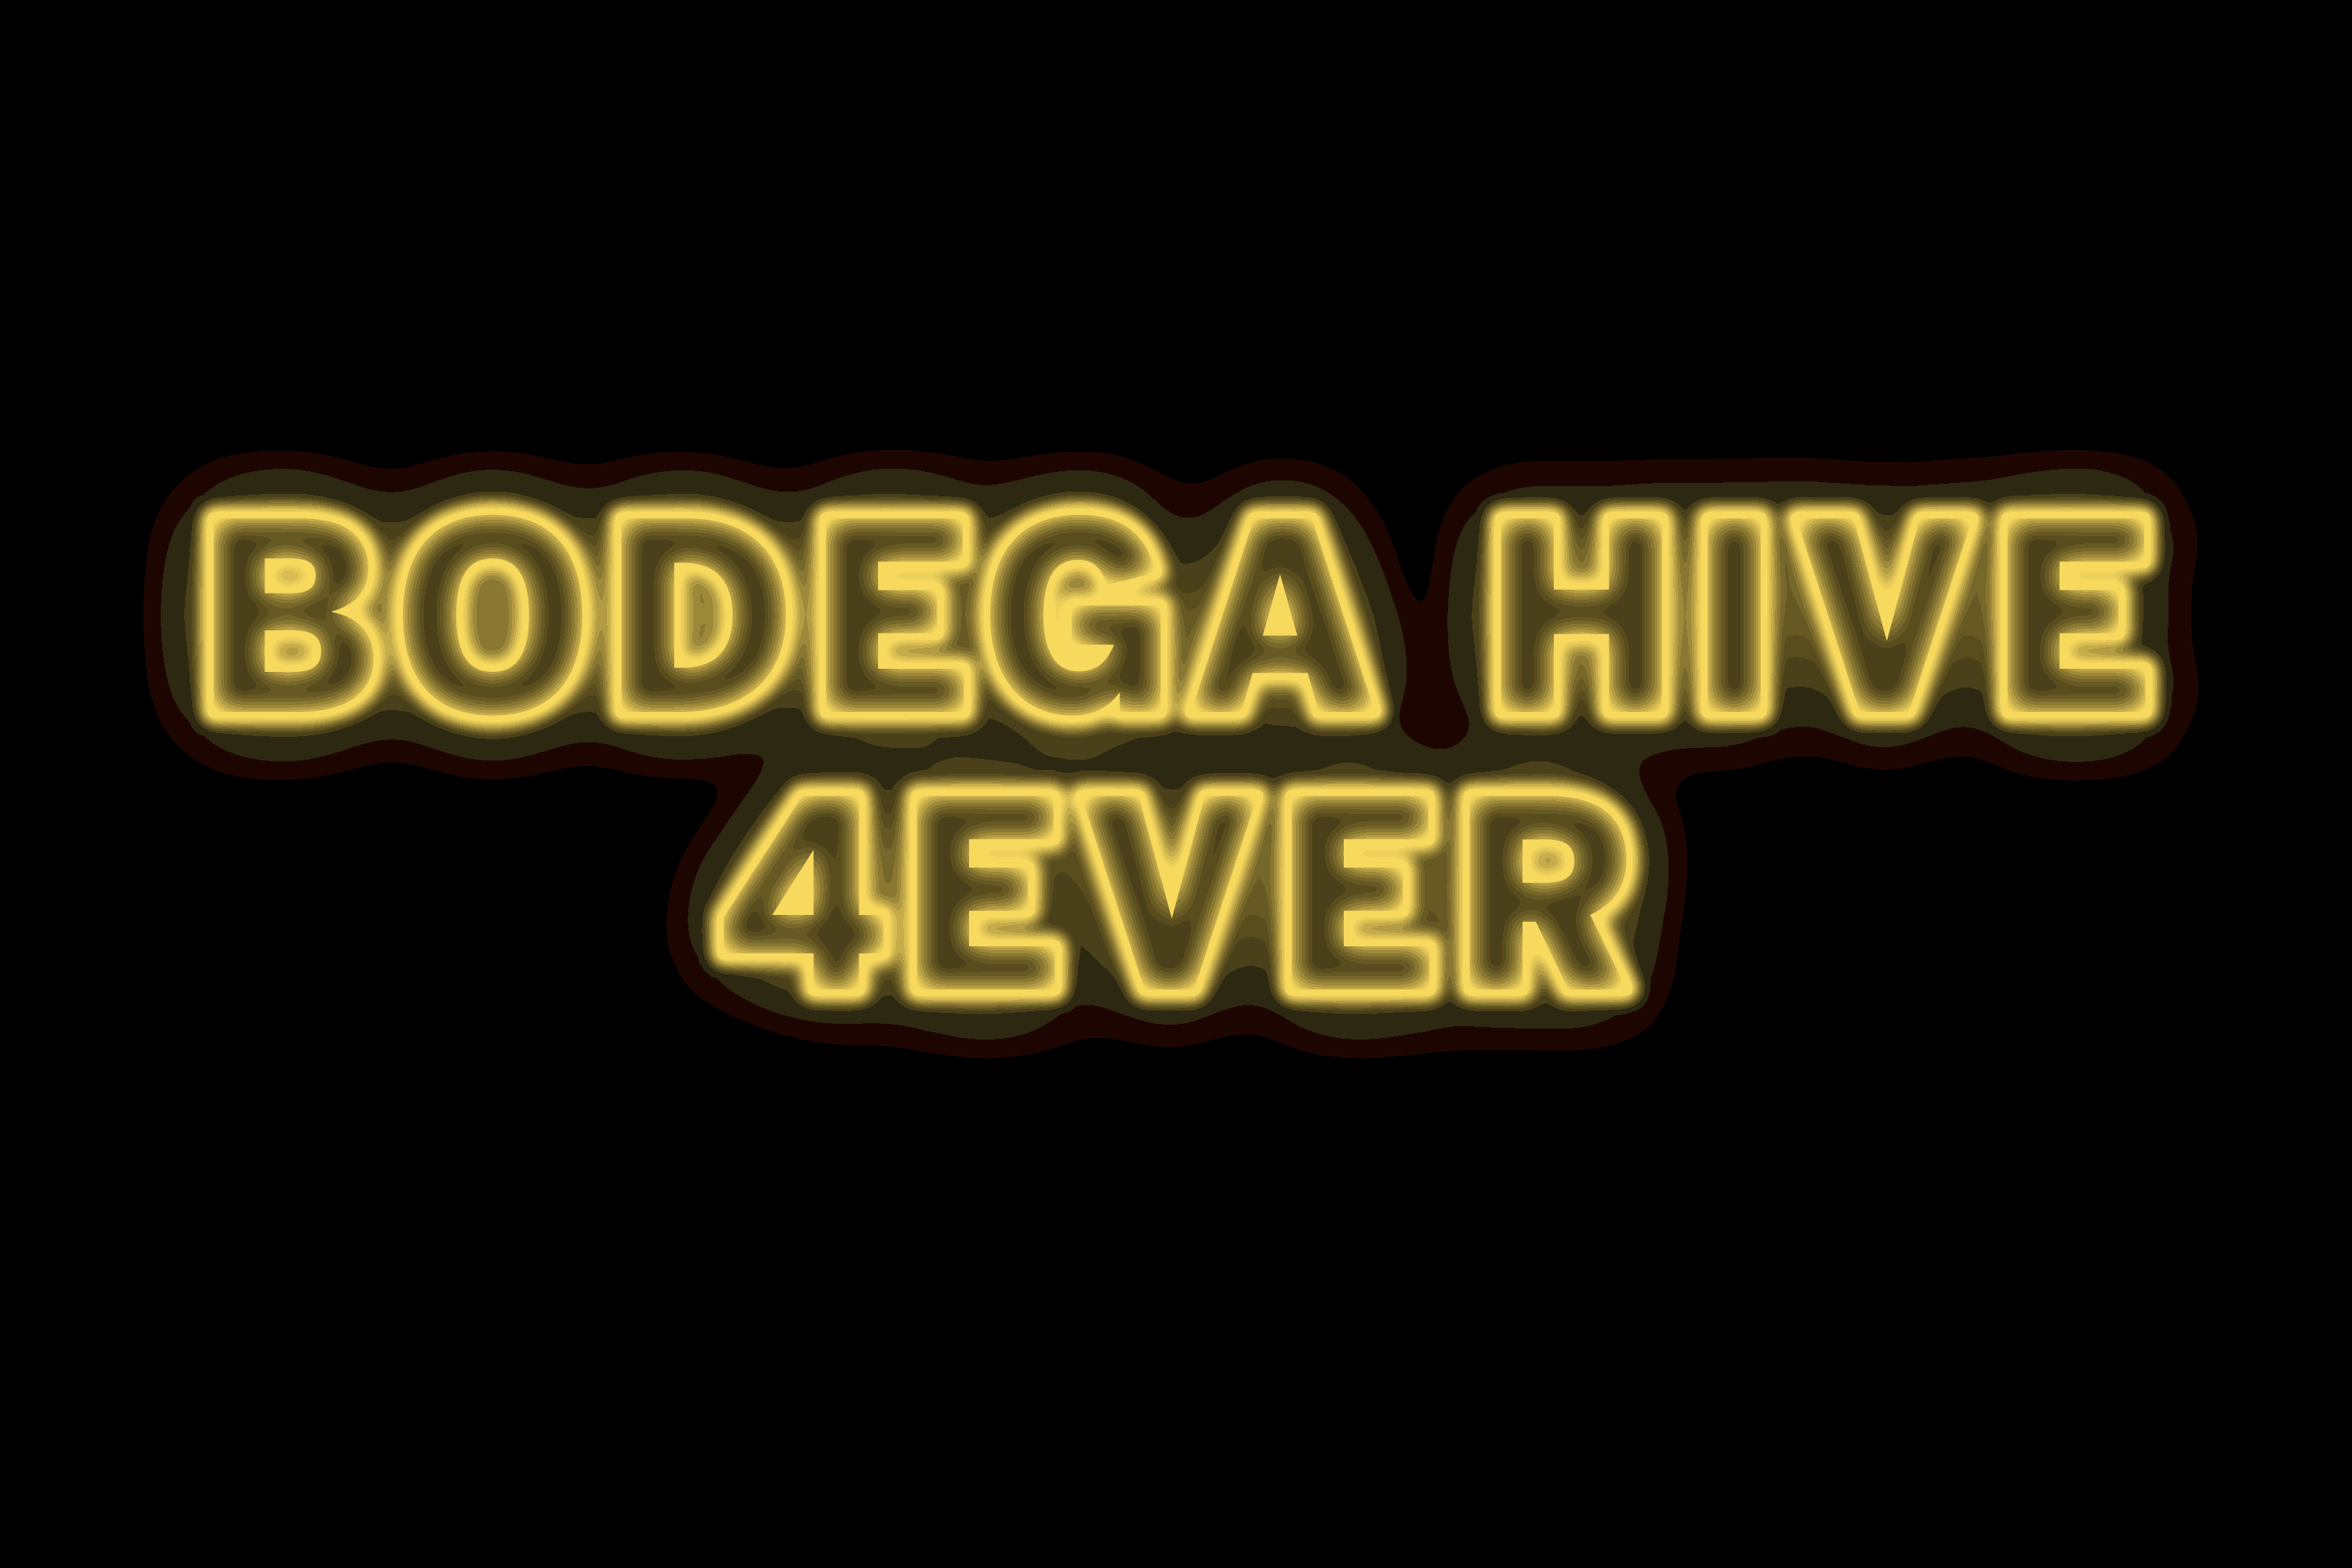 "Bodega Hive 4ever" neon sign 